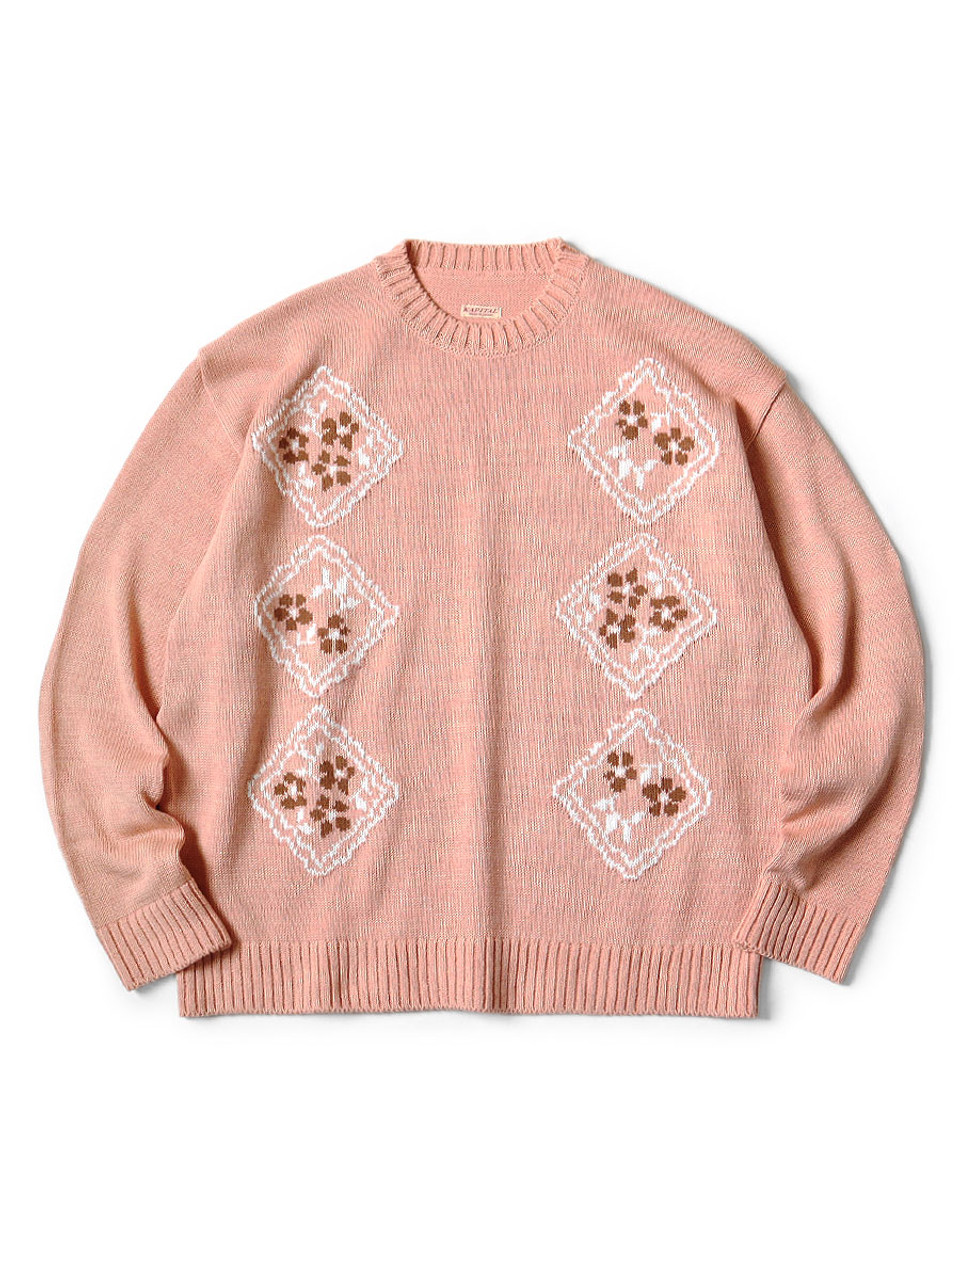 KAPITAL Knit Sweater 5G Cotton Knit KOOKIE Crew Sweater